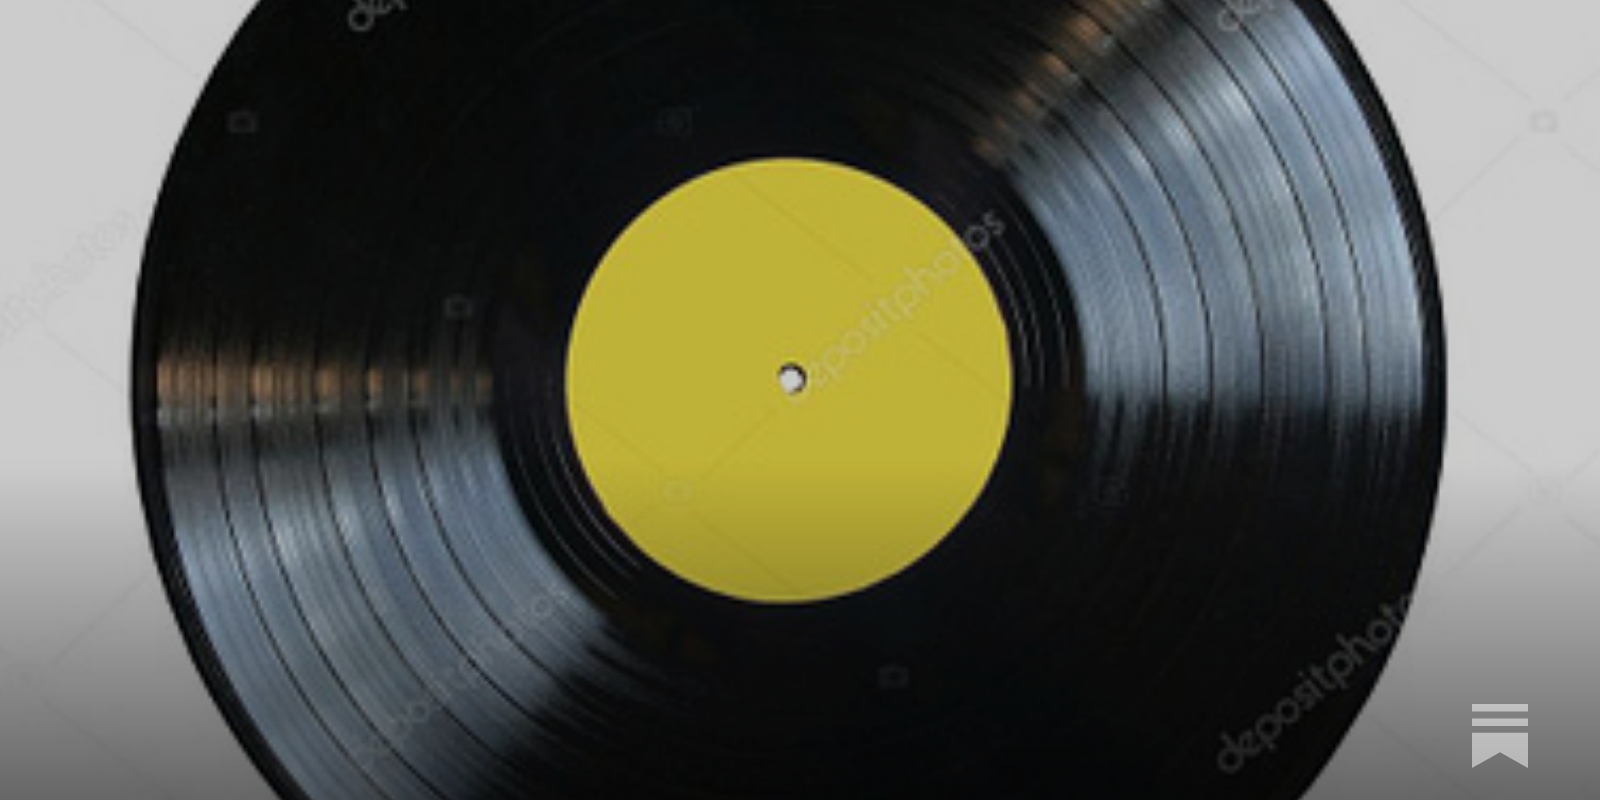 How to Read Your Vinyl - by Joe Schoolcraft